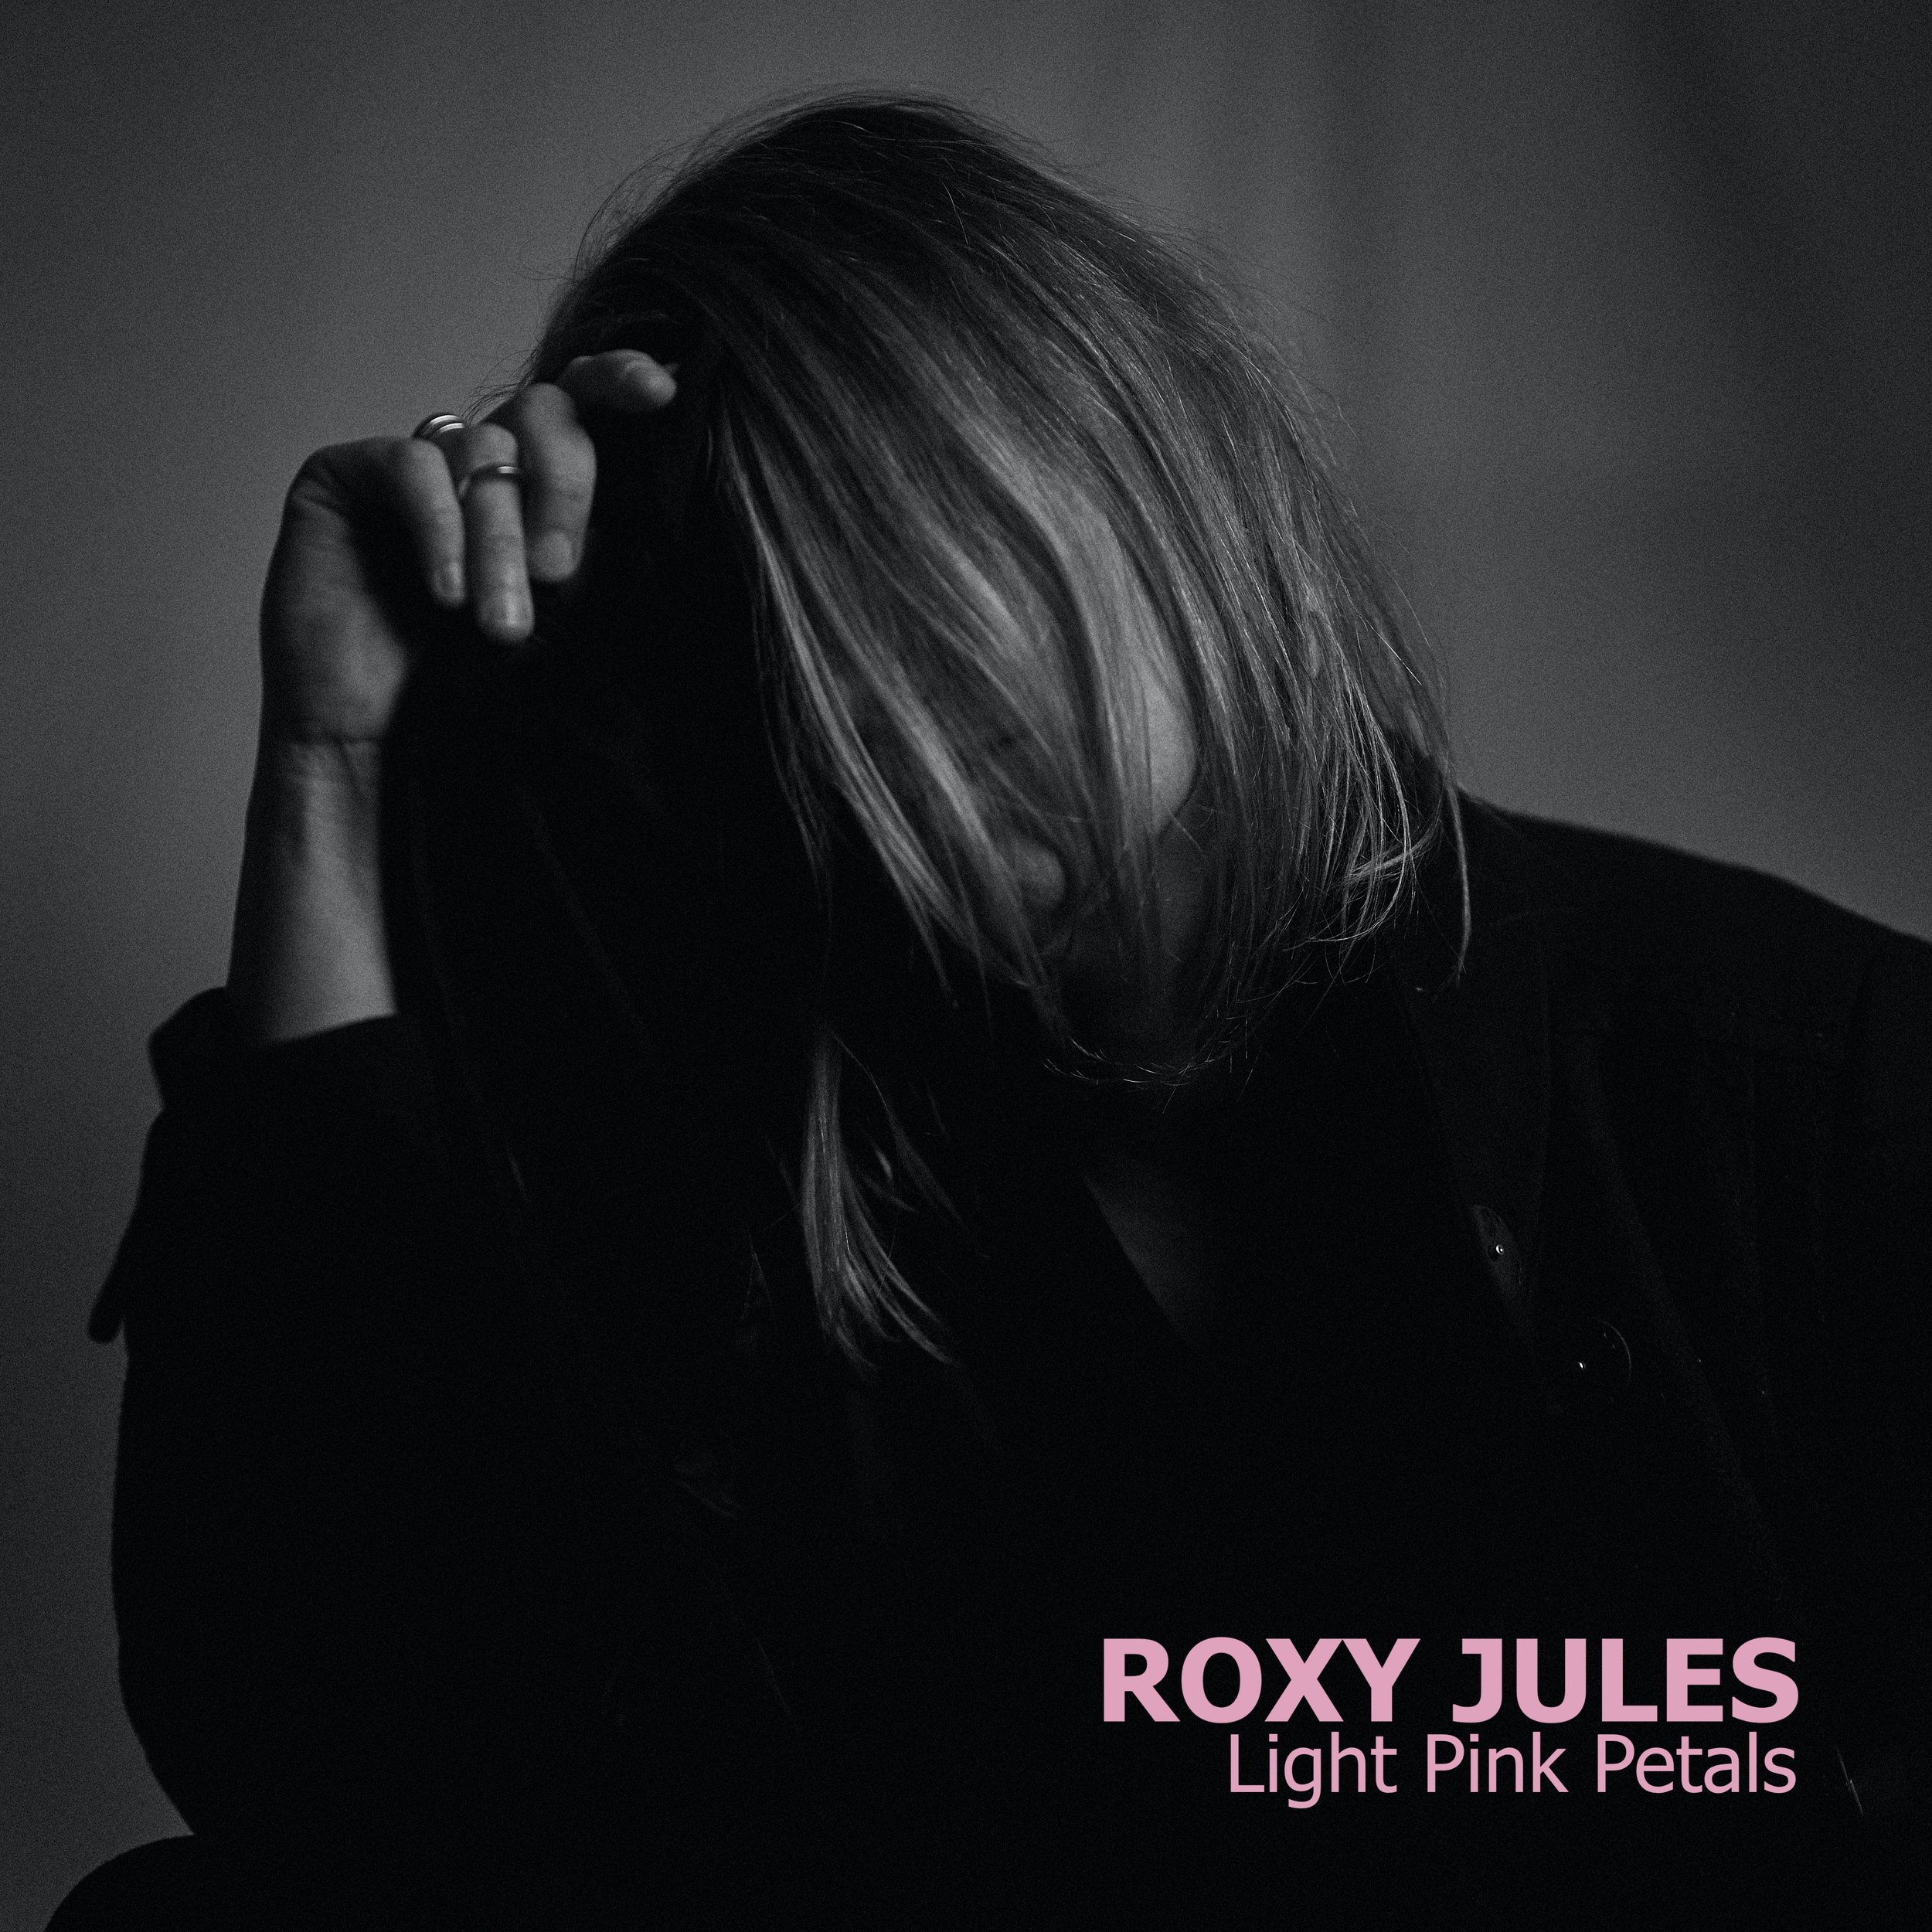 Roxy Jules